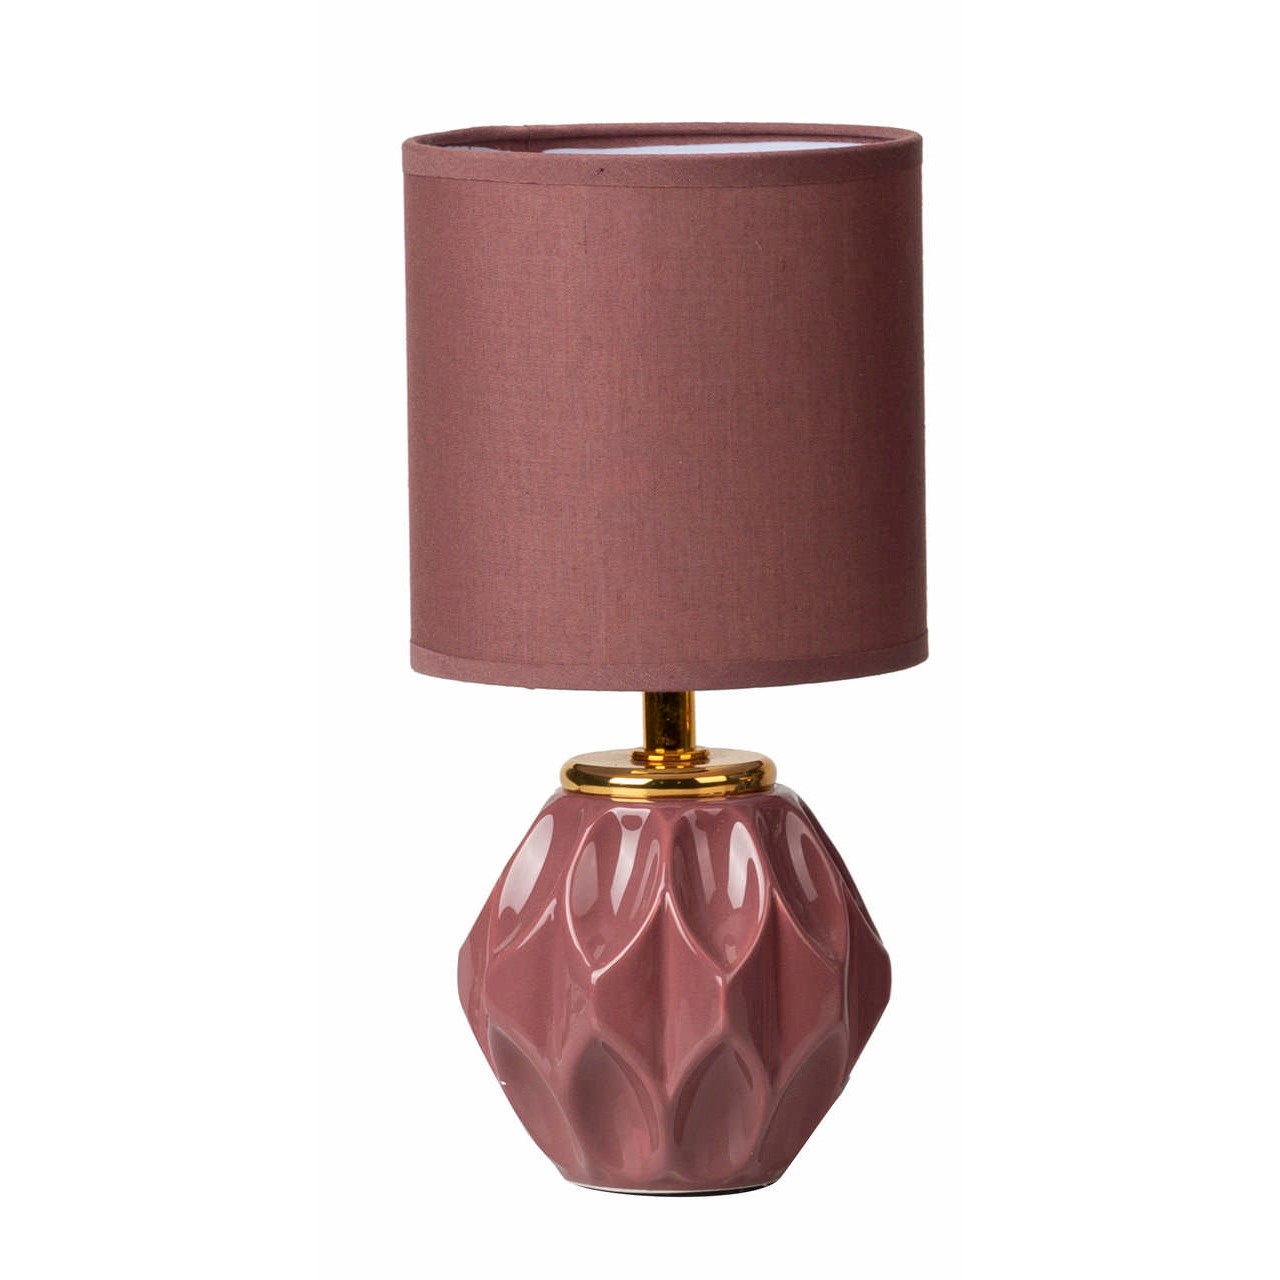 34752-lampara-mesita-ceramica-rosa-fuerte.jpg